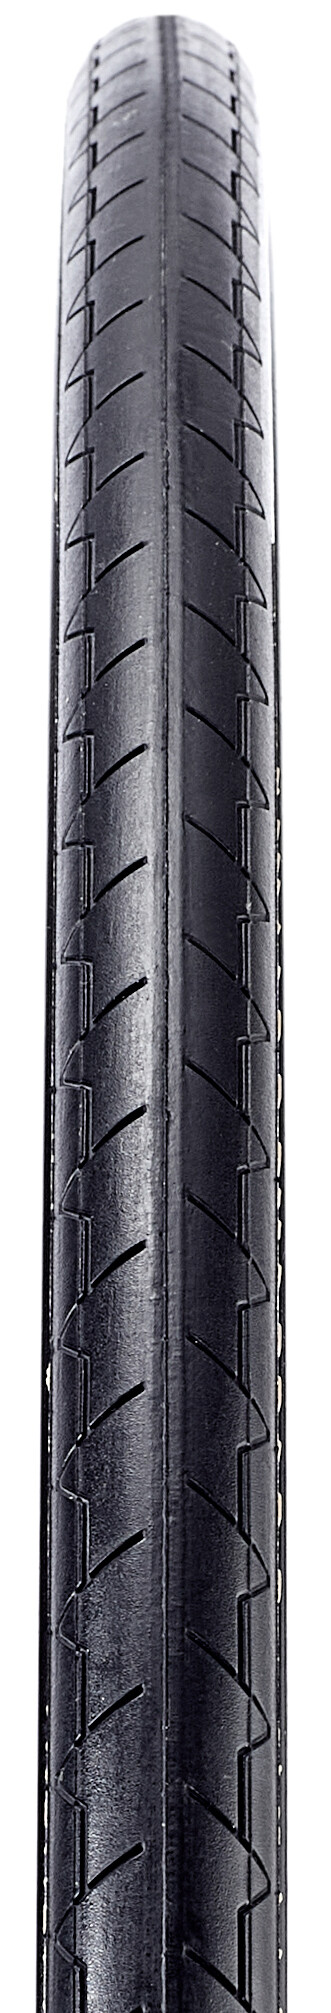 2x Michelin Dynamic Classic Wire Tyre Road Bike Vintage 700 x 20c